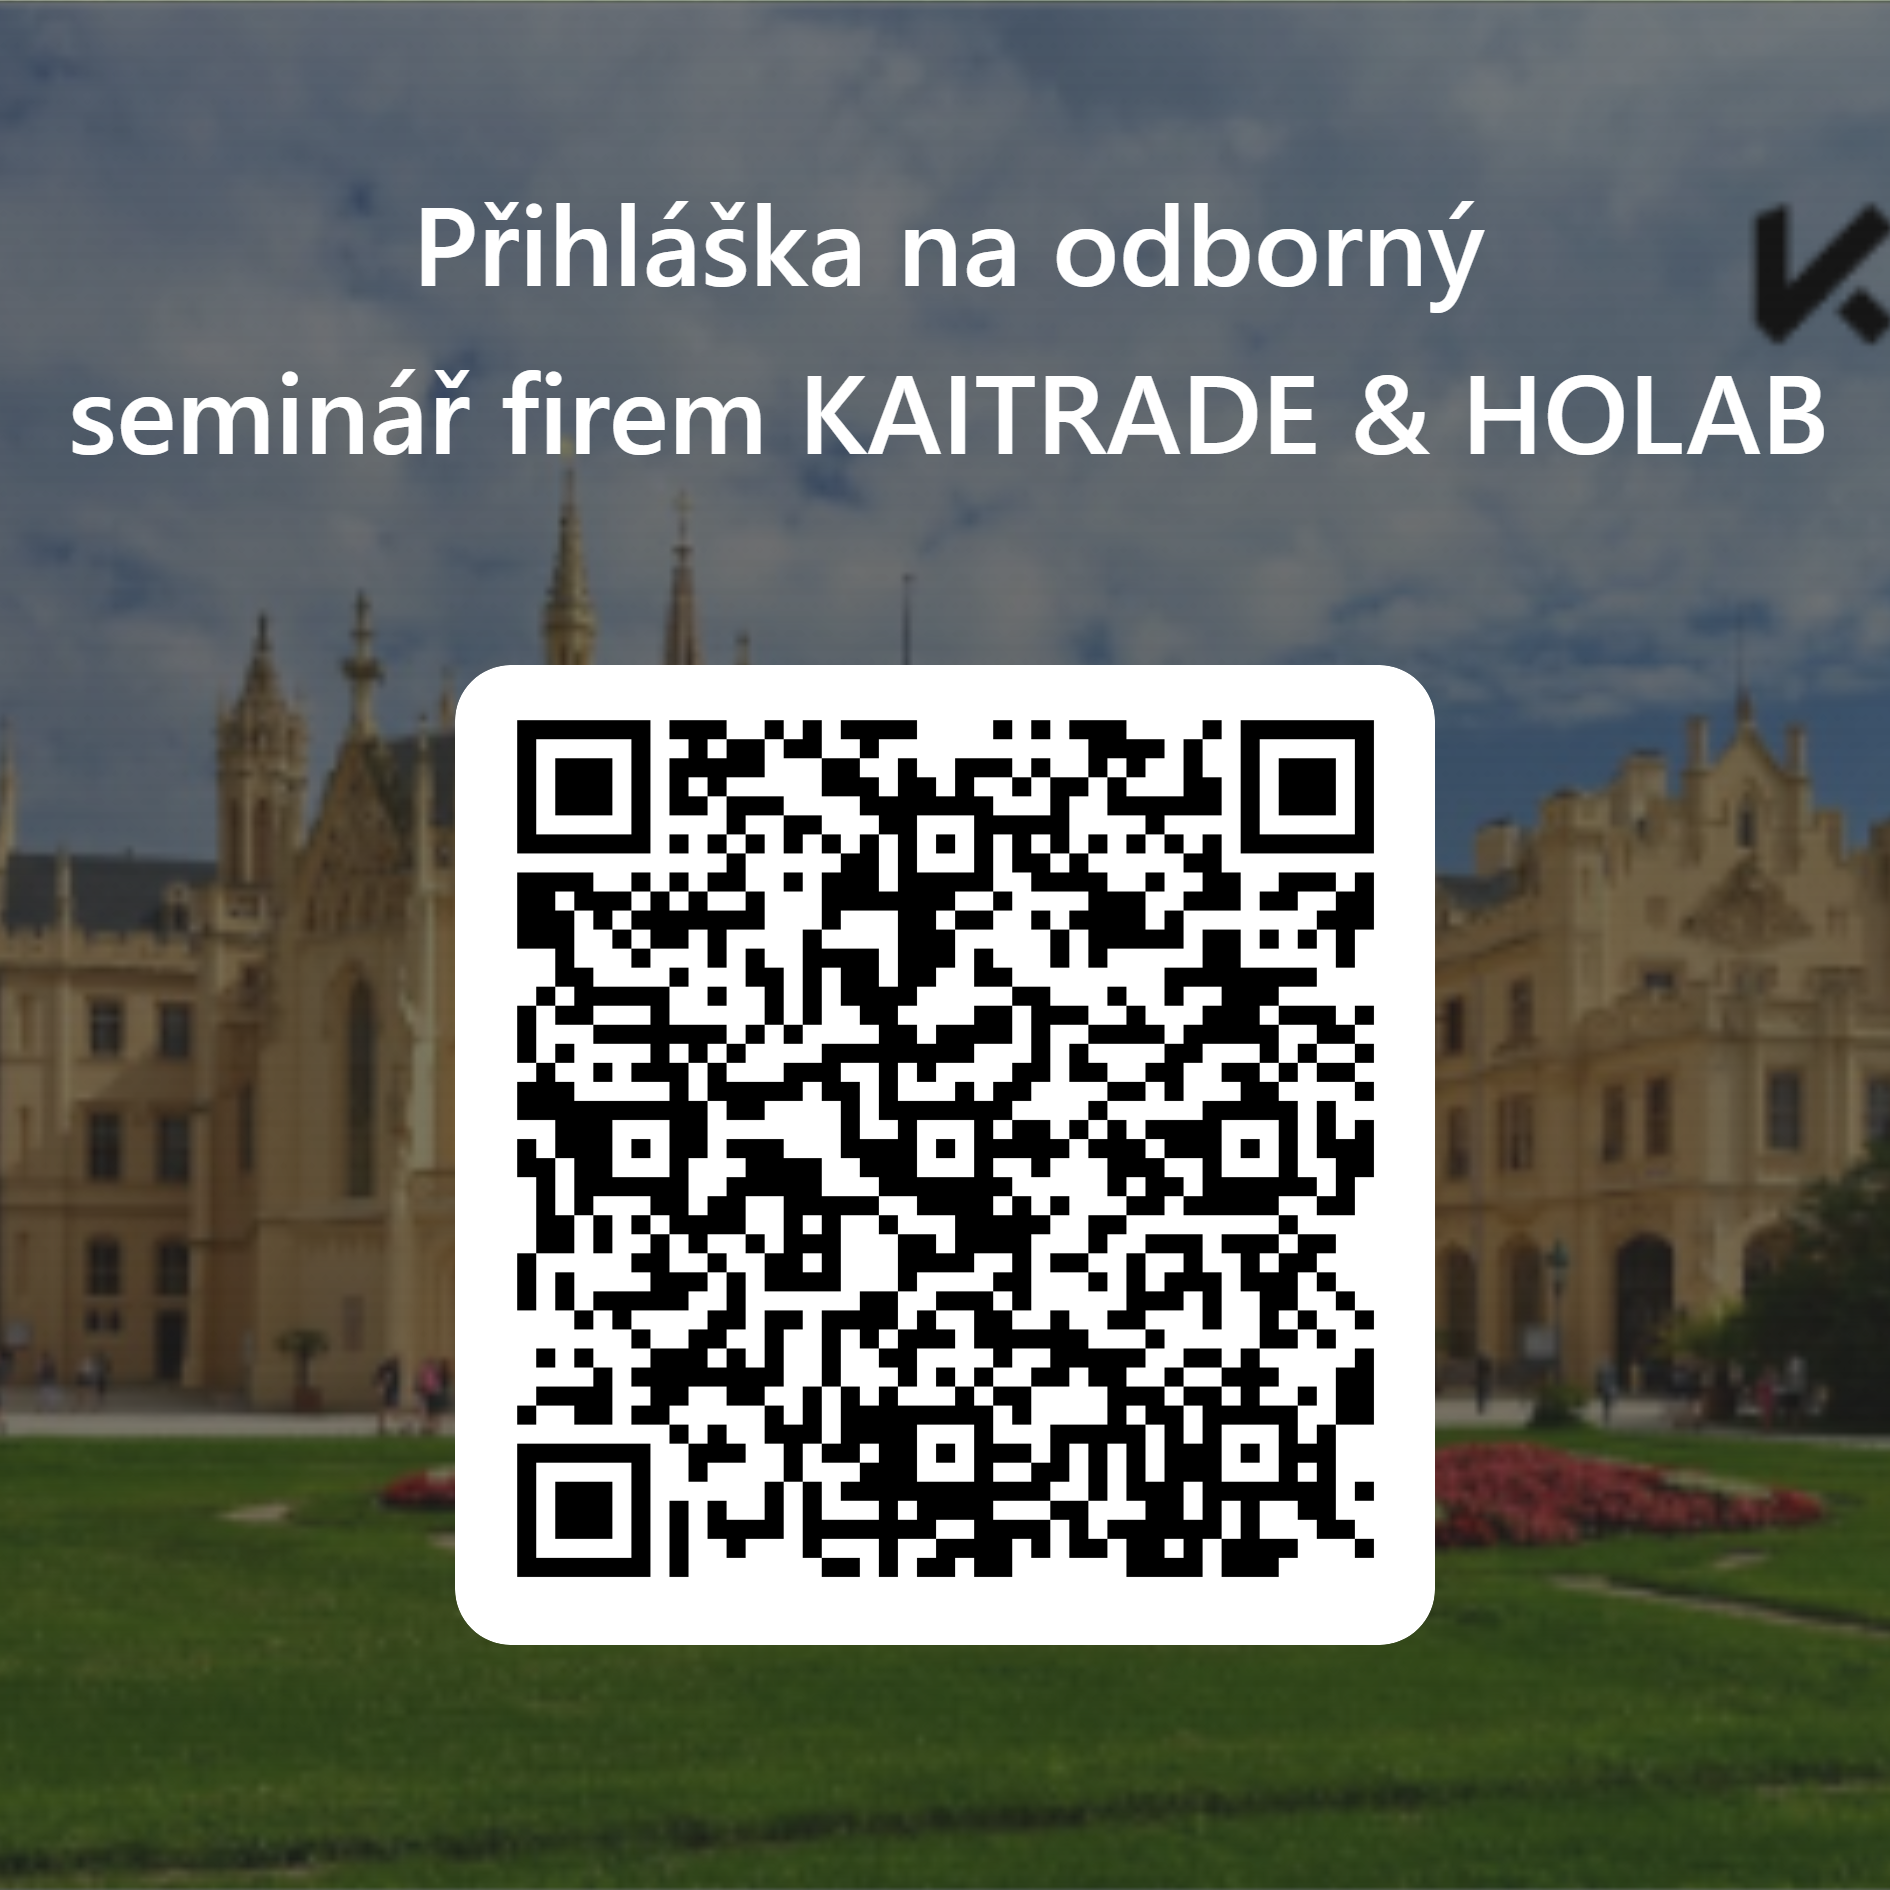 https://kaitrade.cz/media/seminare/lednice-2023/qrcode-pro-prihlaska-na-odborny-seminar-firem-kaitrade-holab-1.png